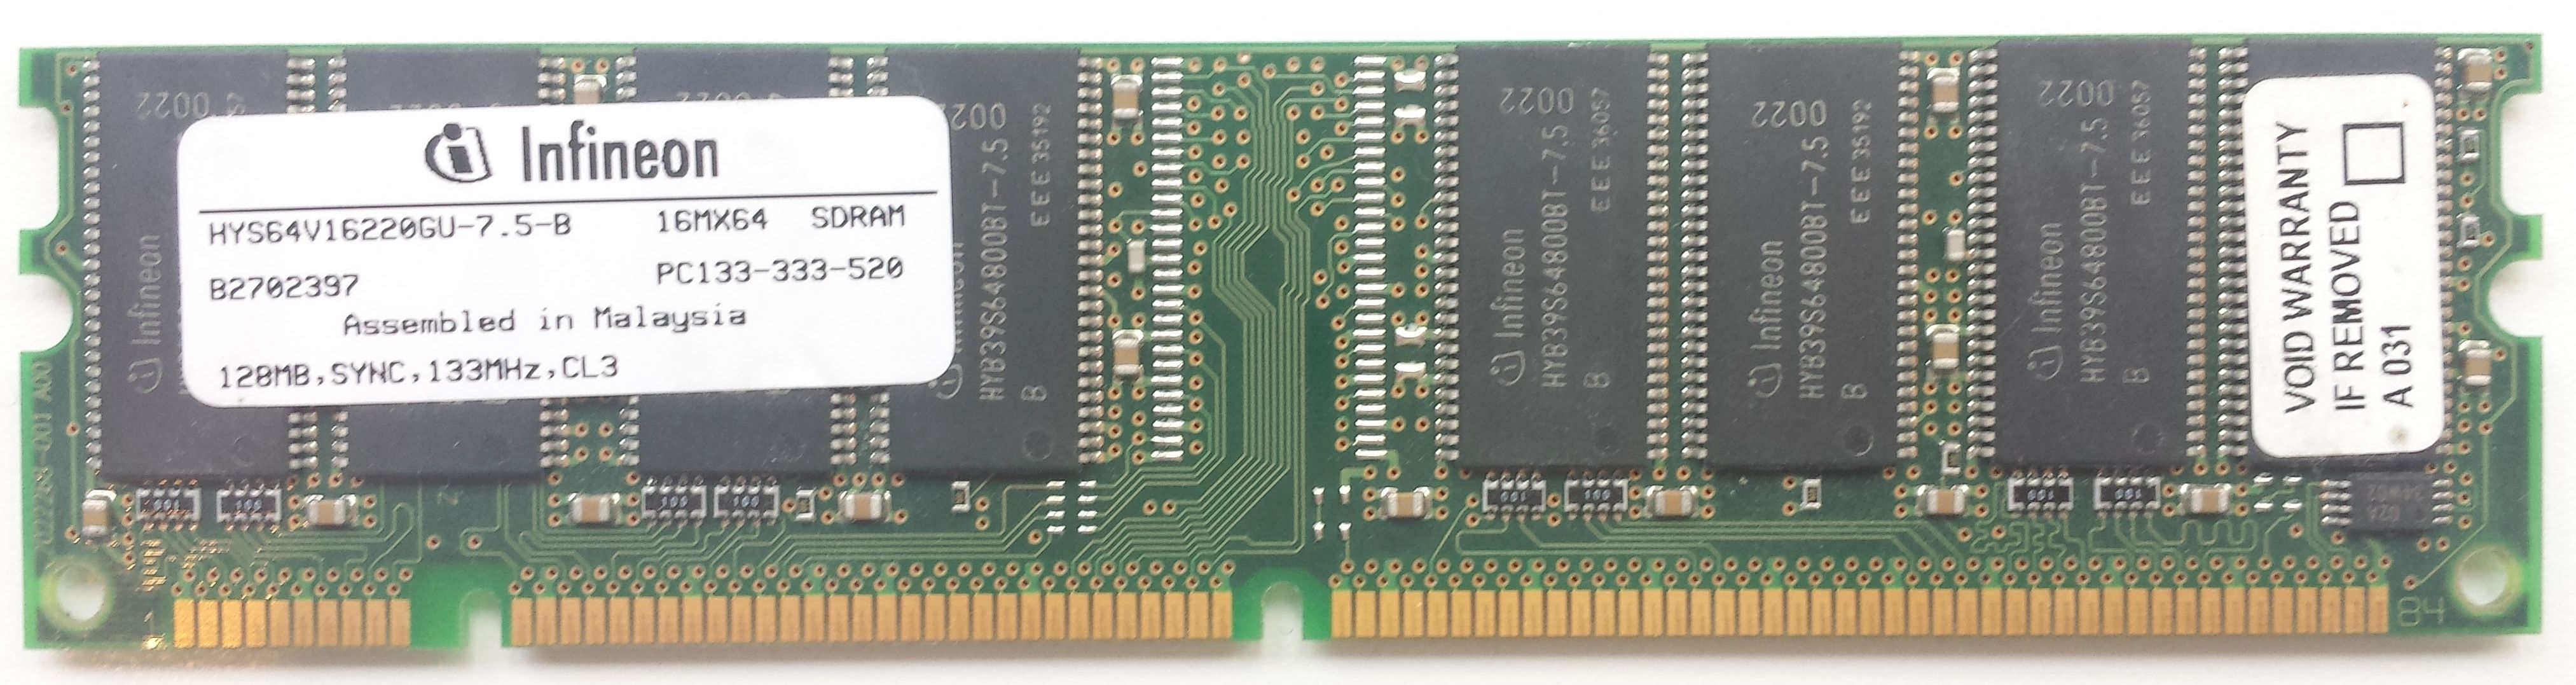 SDRAM 128MB 133Mhz / Infineon HYS64V16220GU-7.5-B